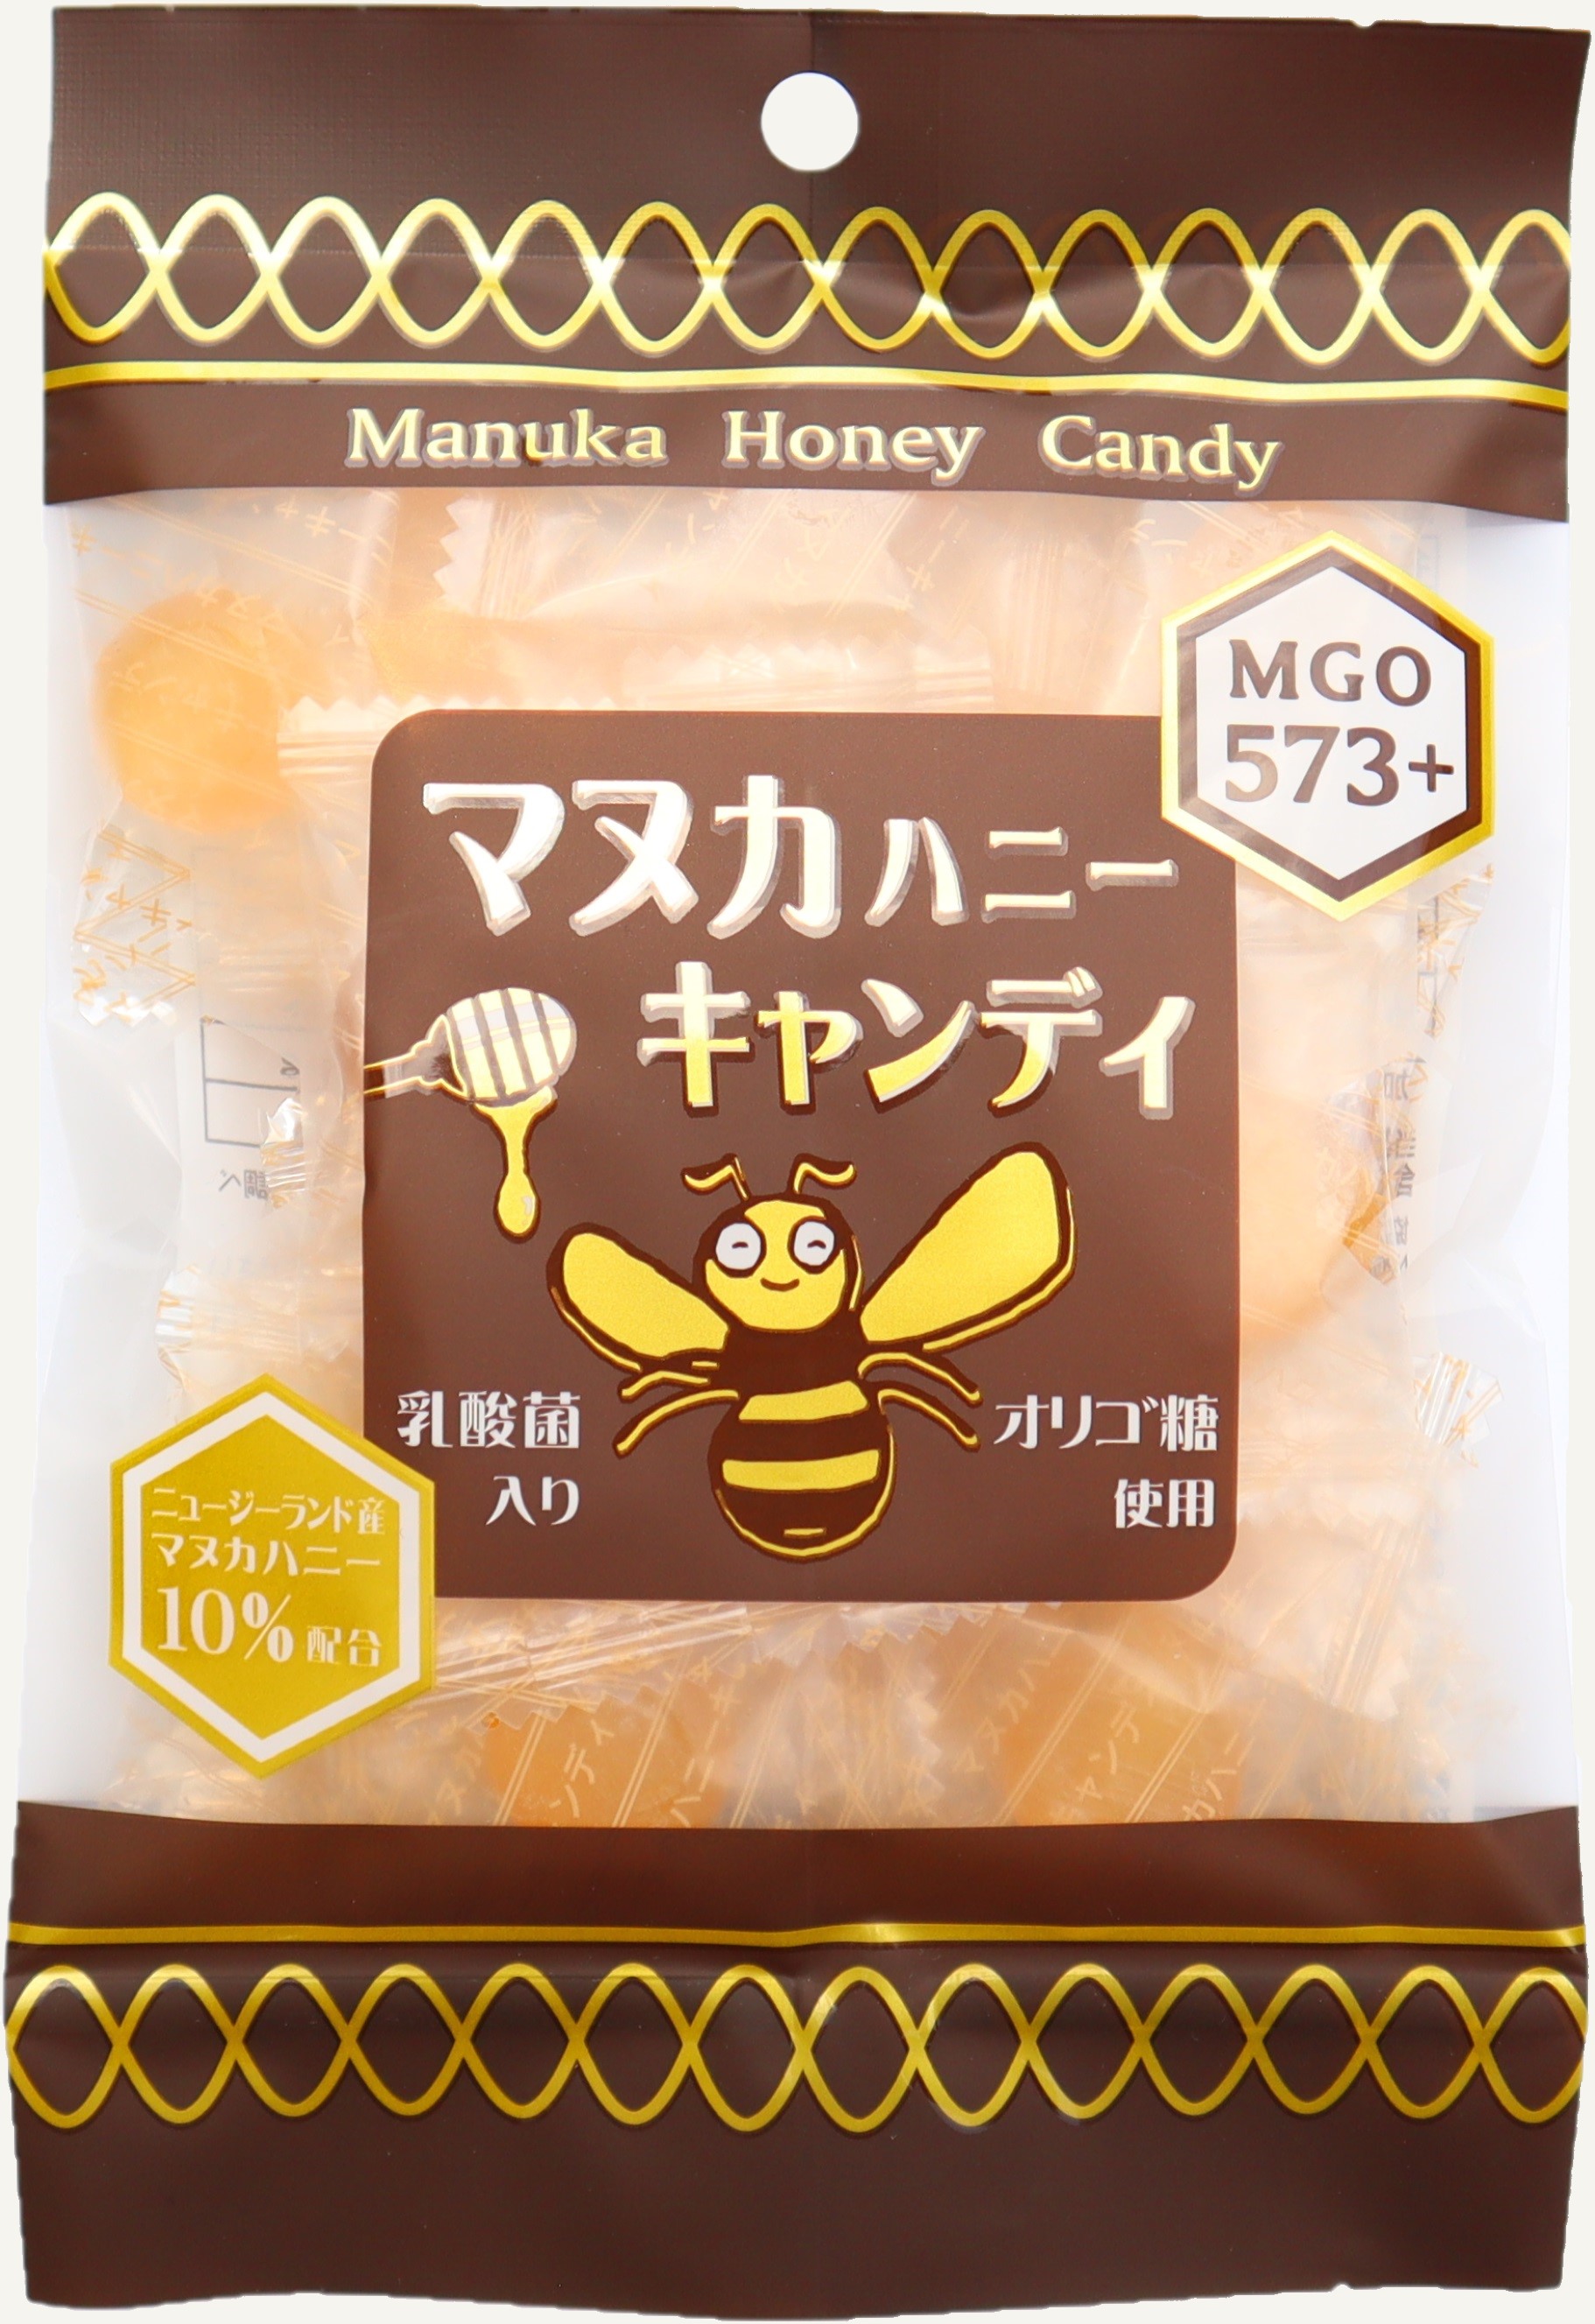 Manuka Honey Candy